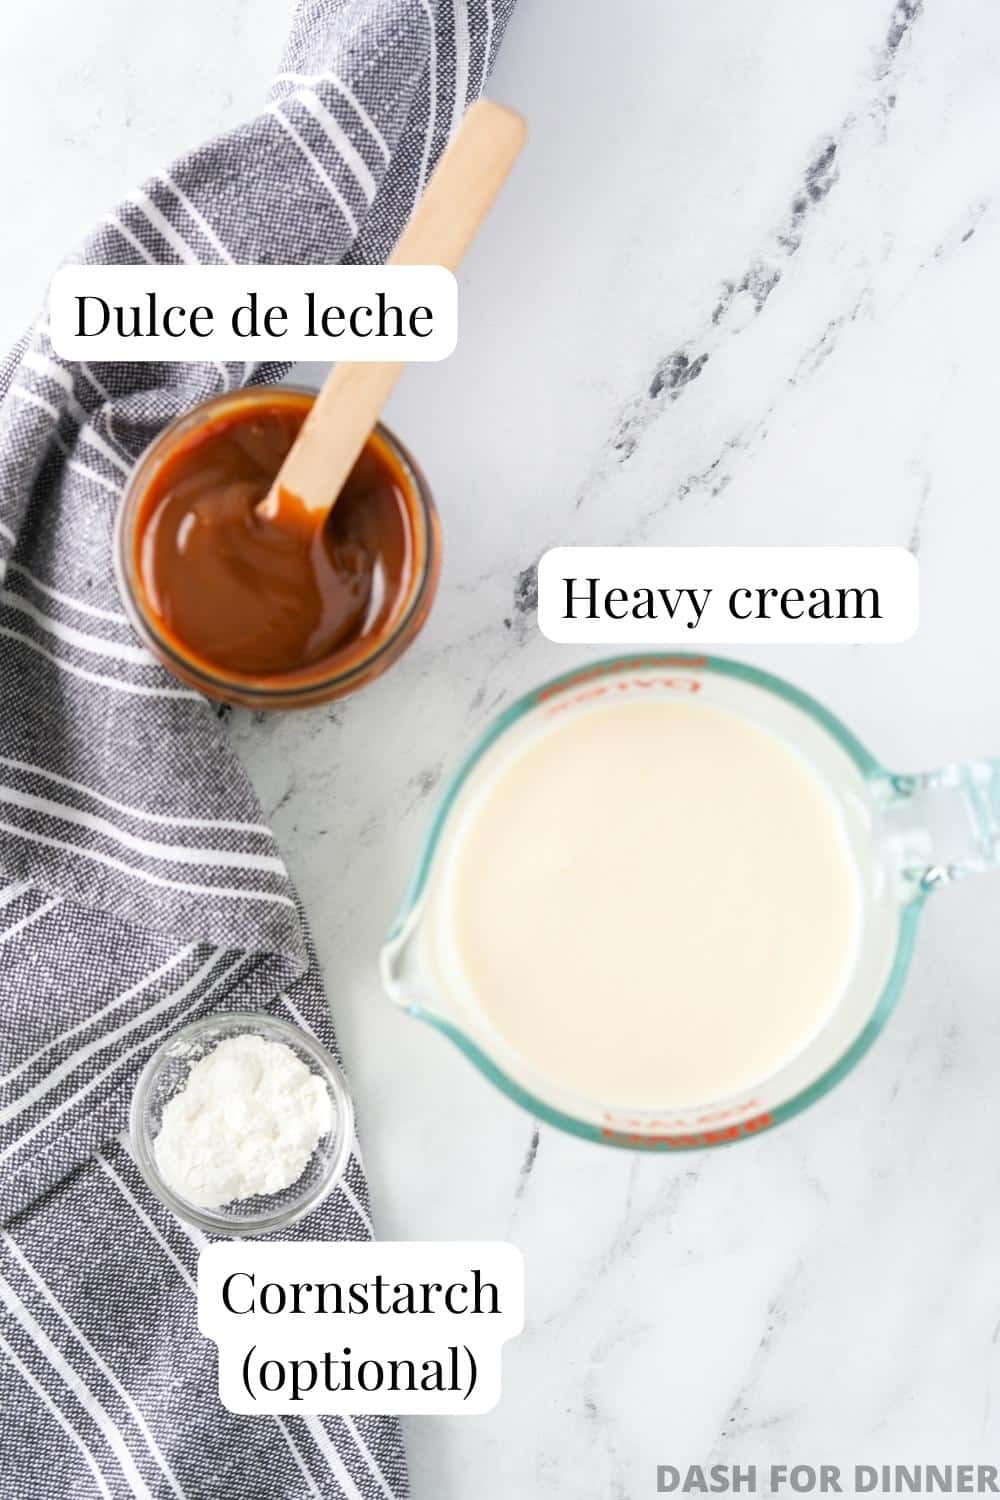 The ingredients needed to make dulce de leche mousse: heavy cream, dulce de leche, and optional cornstarch.